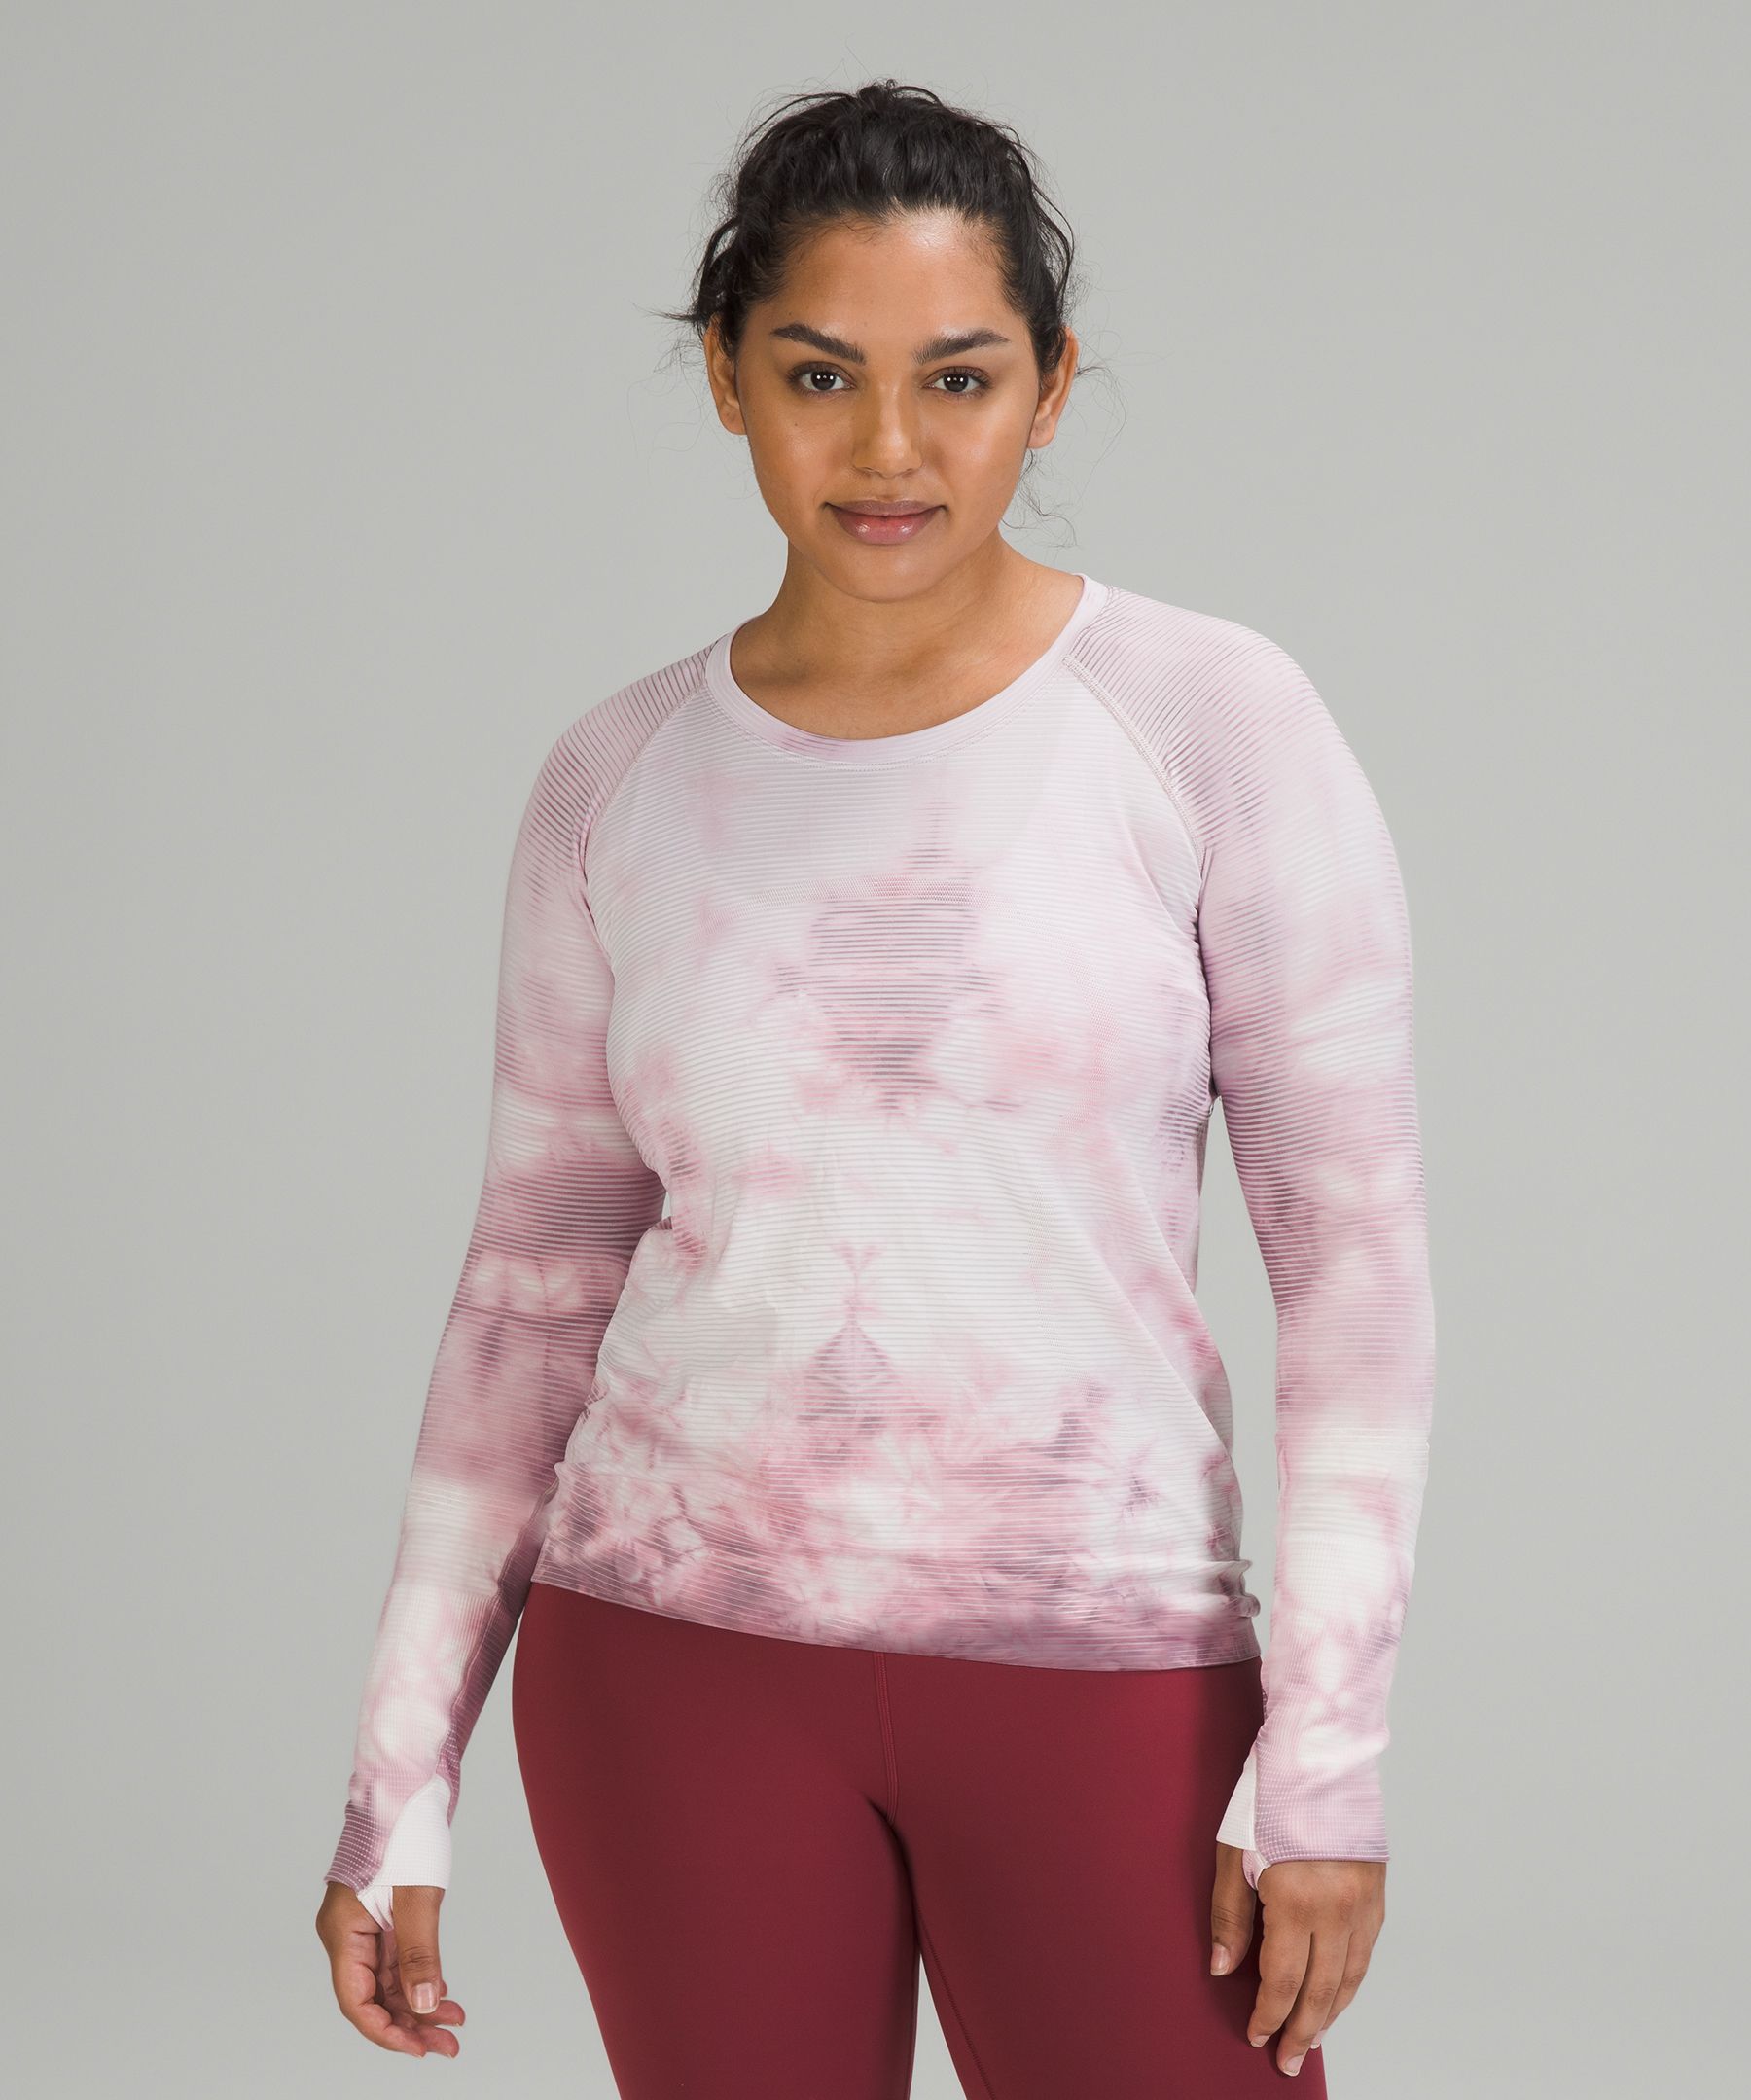 Lululemon Swiftly Tech Long Sleeve Shirt 2.0 In Shibori Stripe Pink Taupe